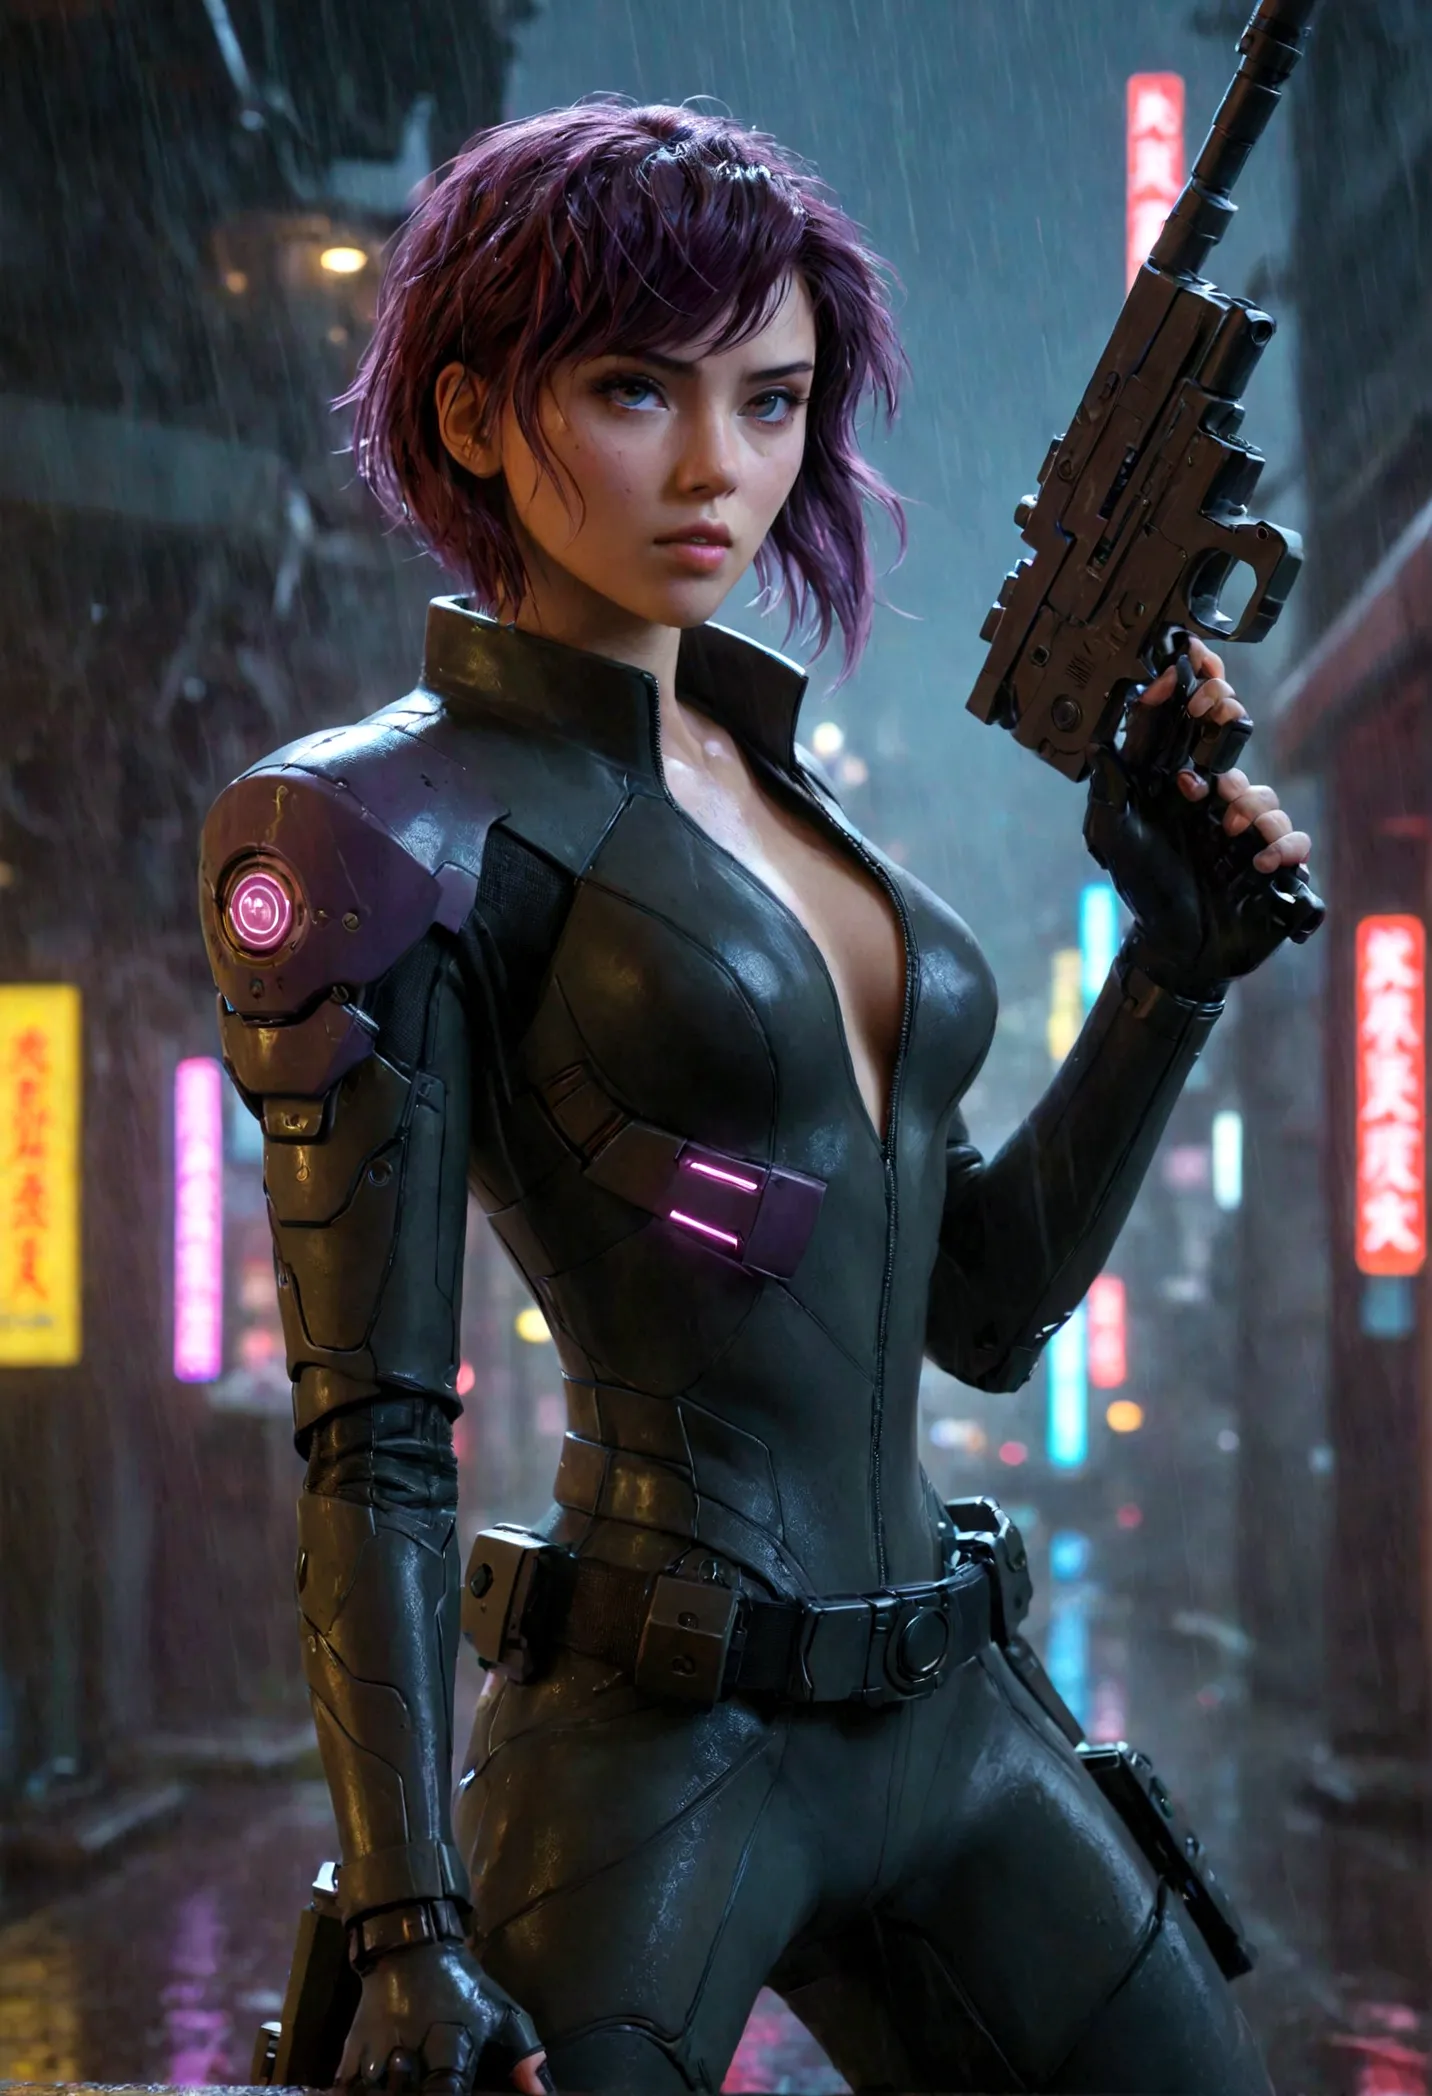 cyberpunk sci-fi character,beautiful young woman wielding a boltgun,ghost in the shell, kusanagi motoko,motion blur,rainy night,...